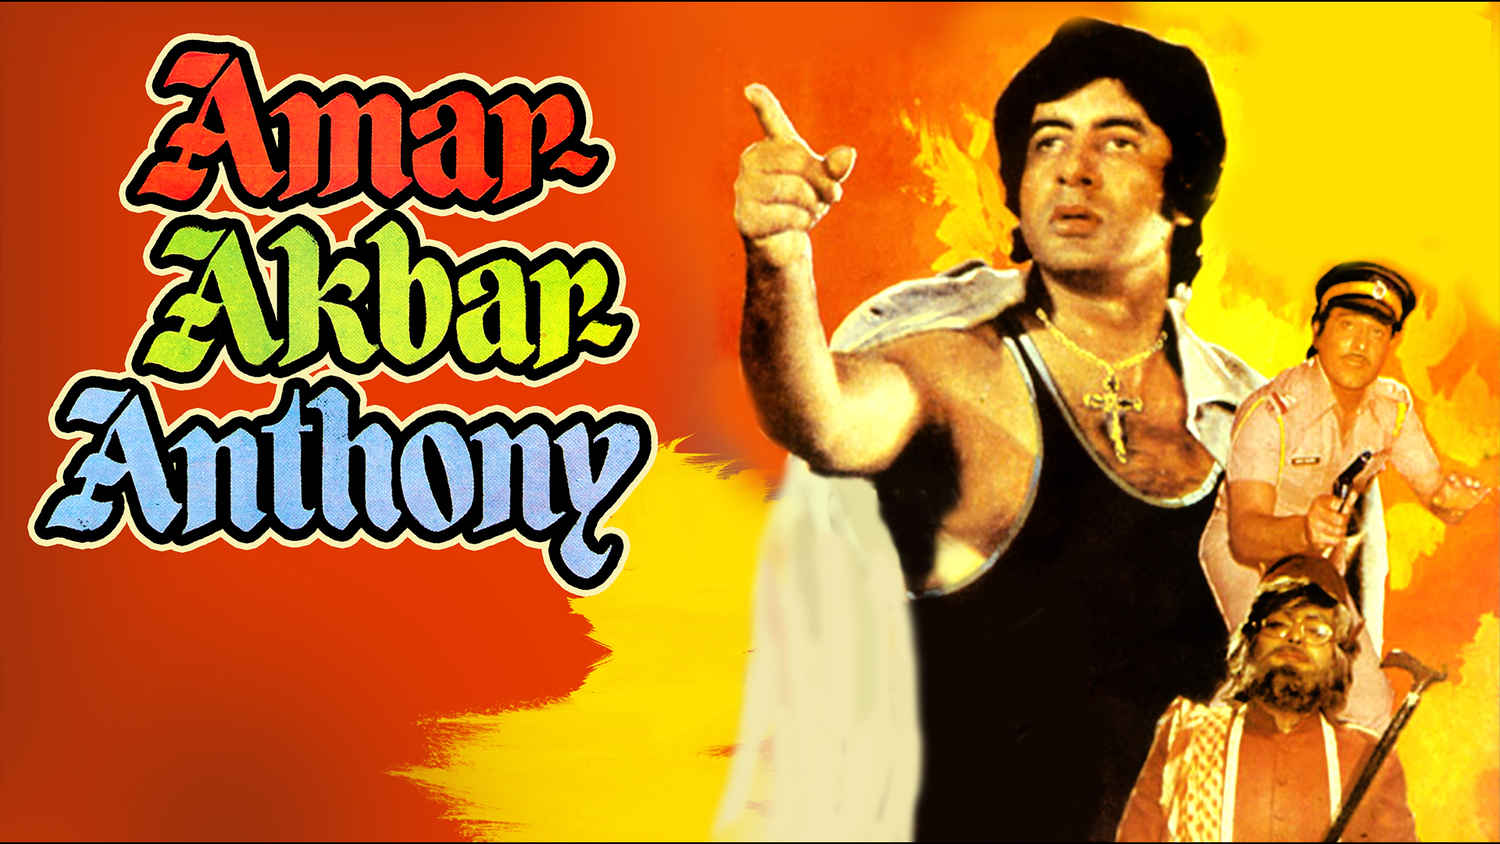 watch malayalam movie amar akbar anthony online free